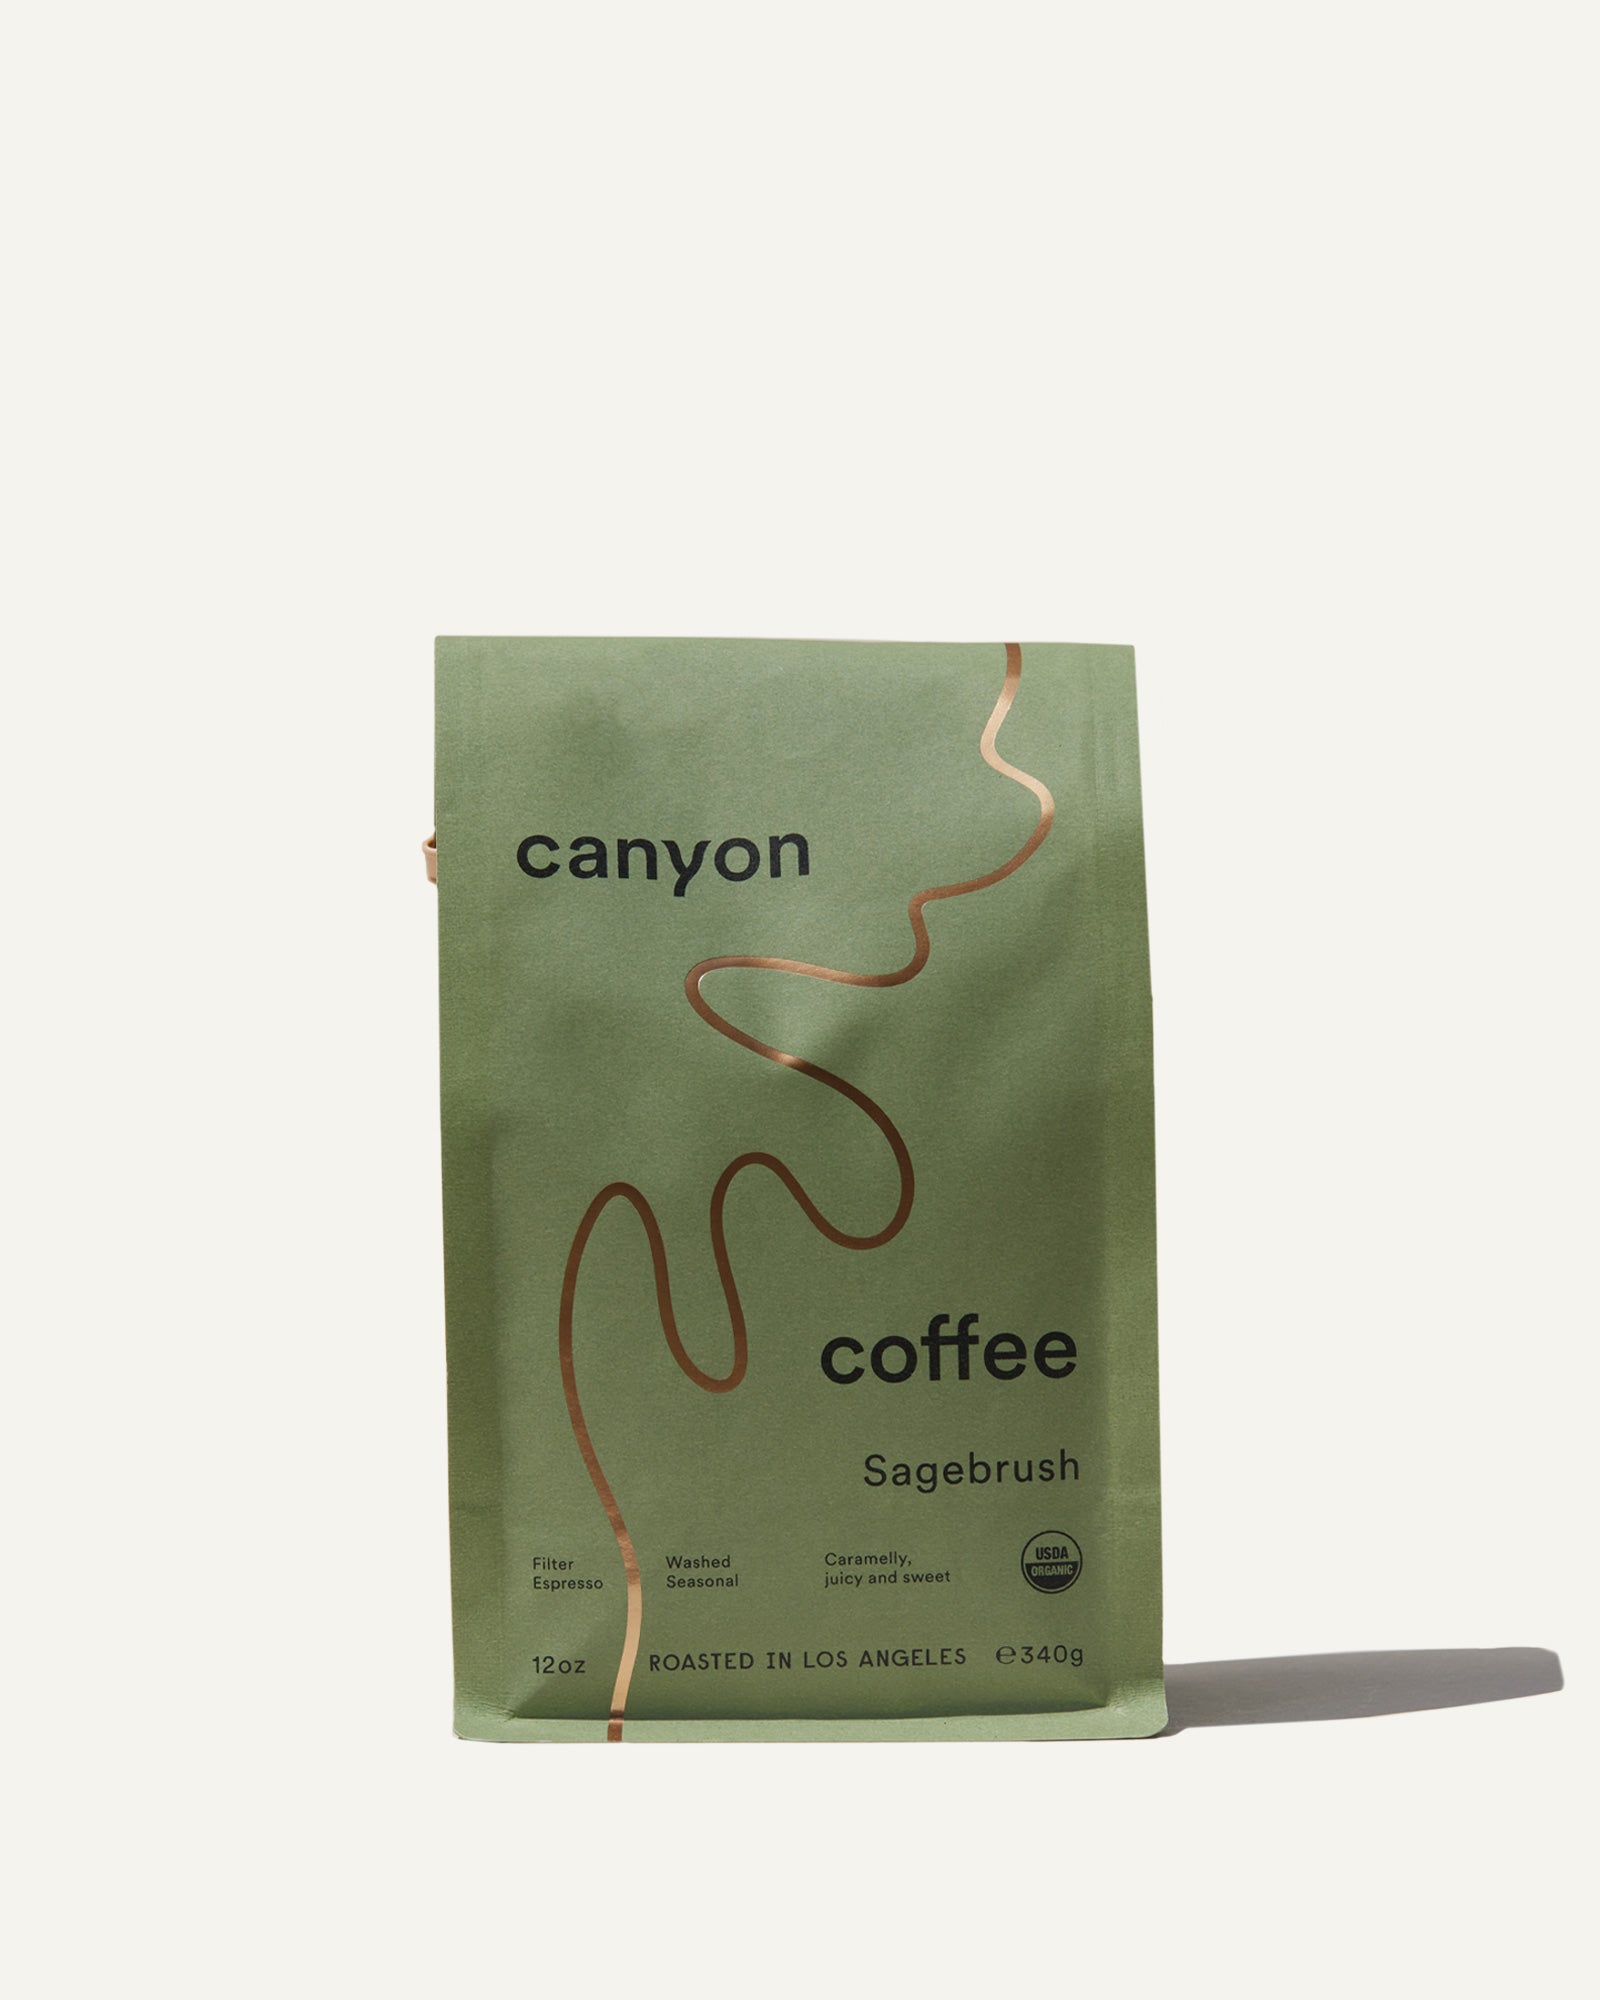 green bag of sagebrush canyon coffee